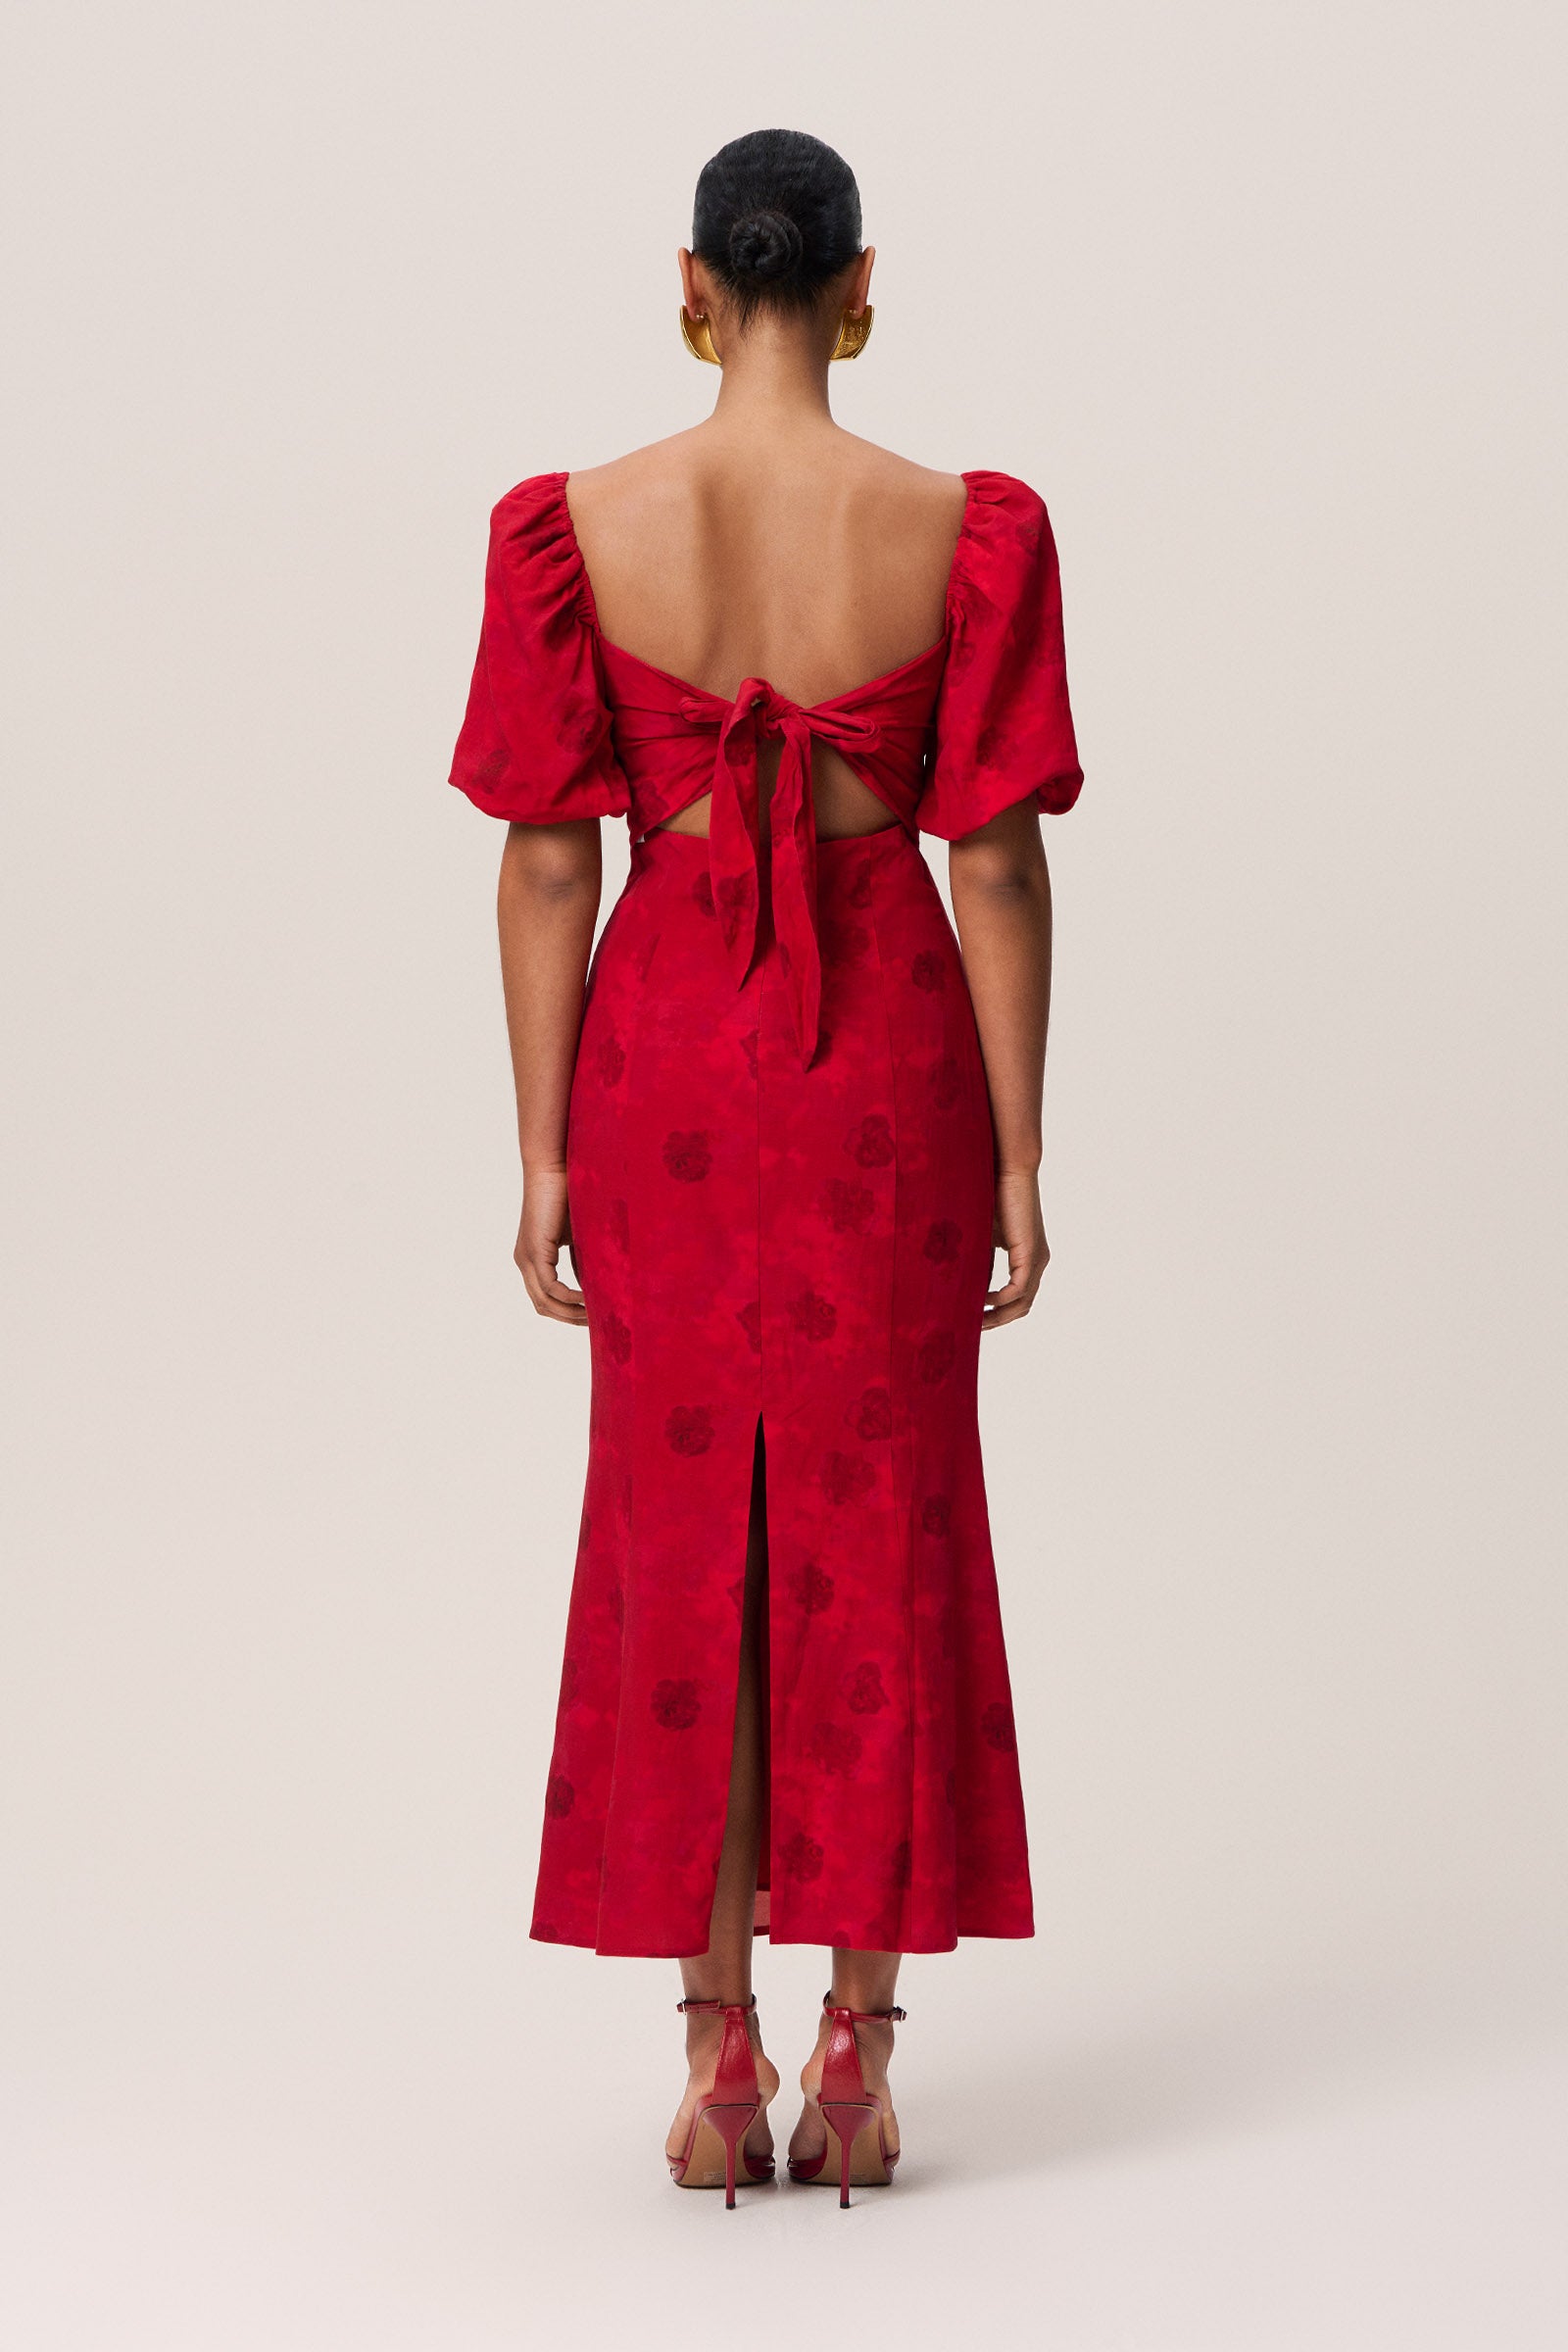 Vercelli Dress – Coming Soon image